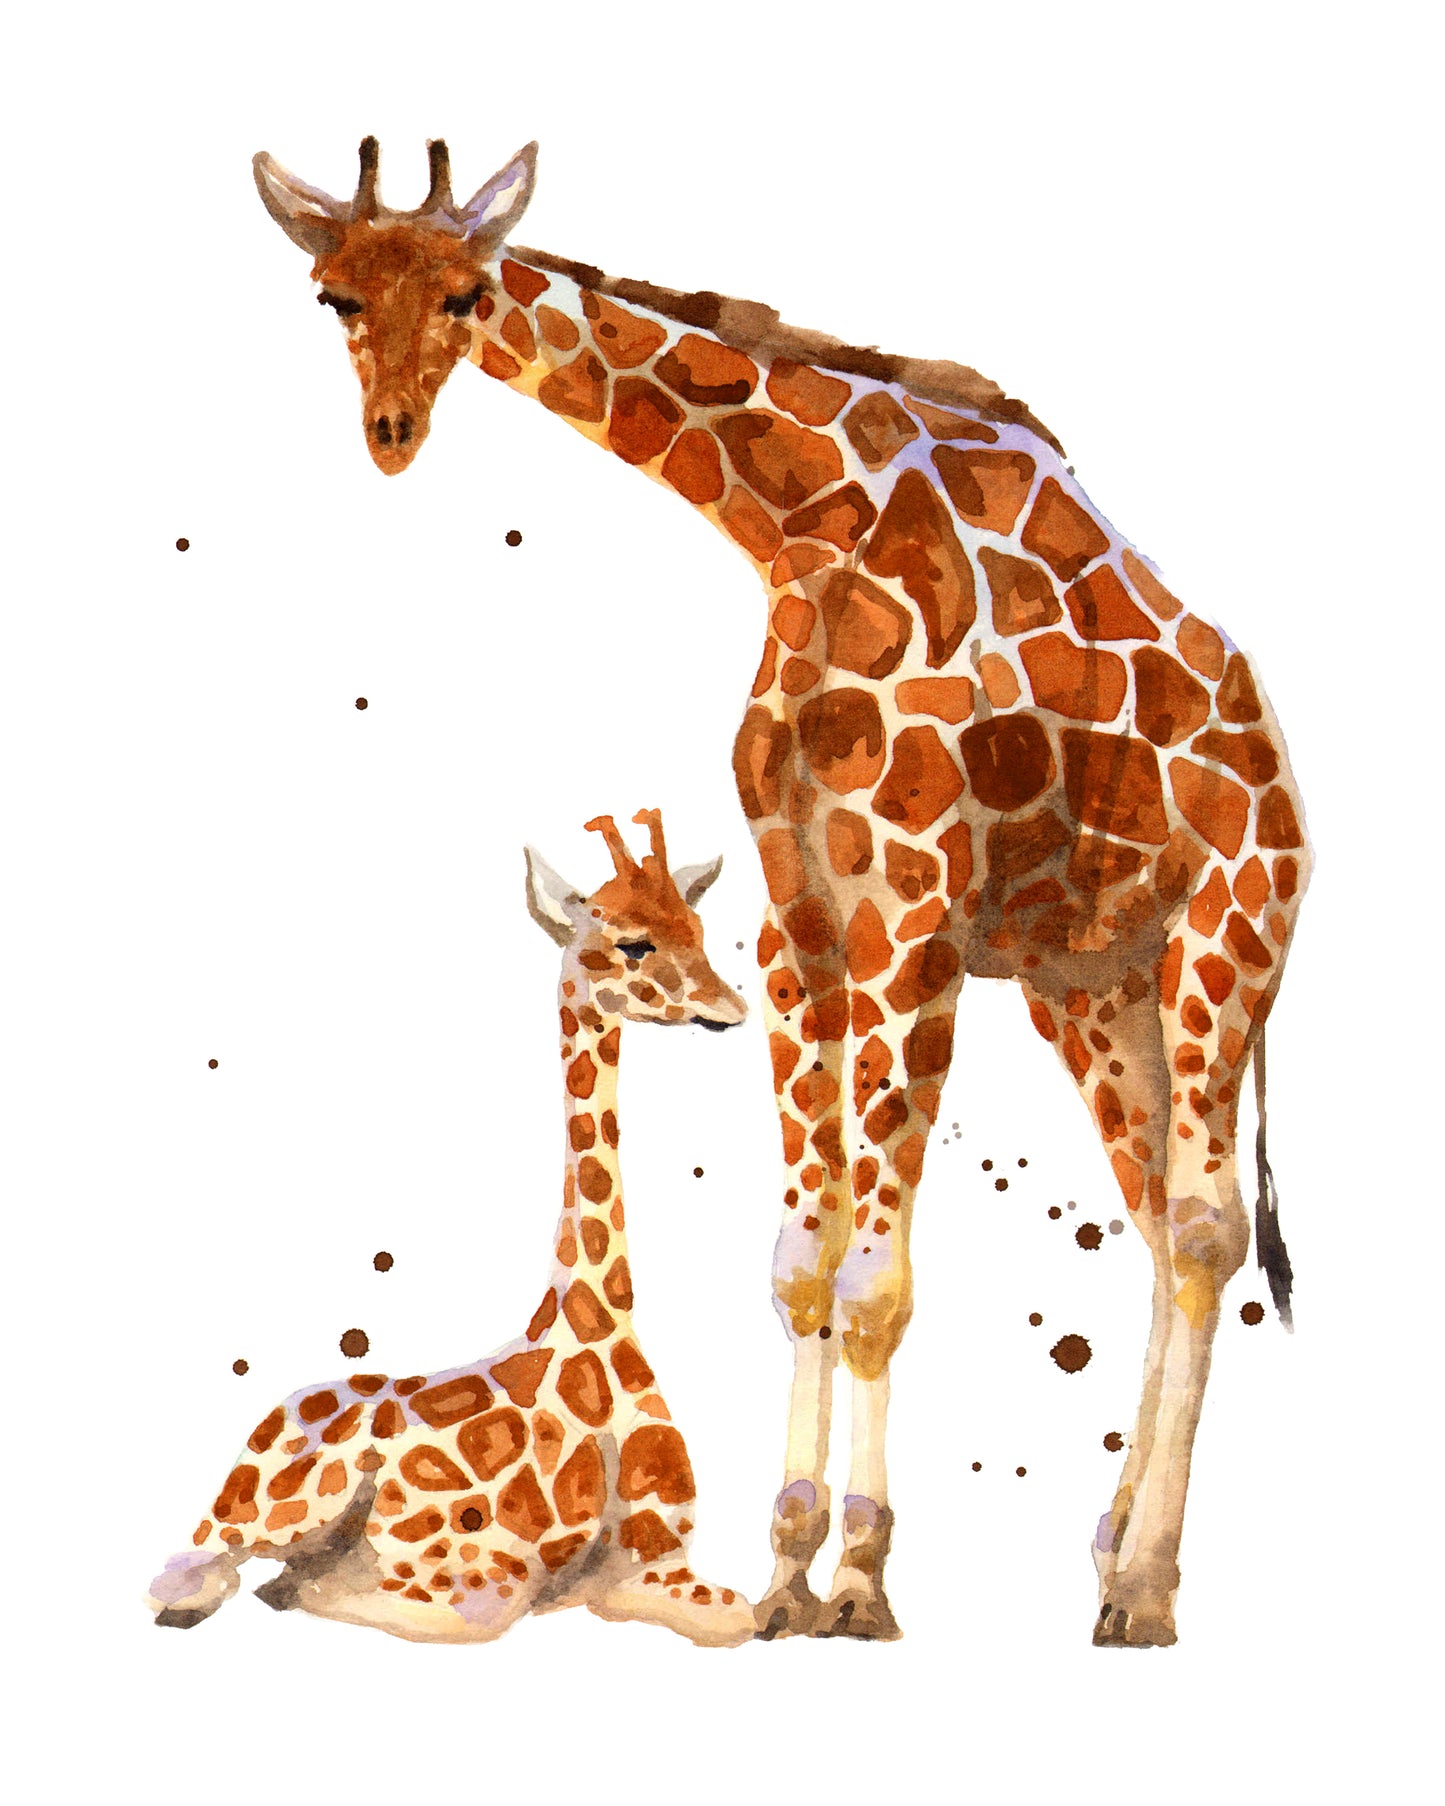 Giraffe Gentleness - giclee watercolour giraffe print - UK made - many sizes